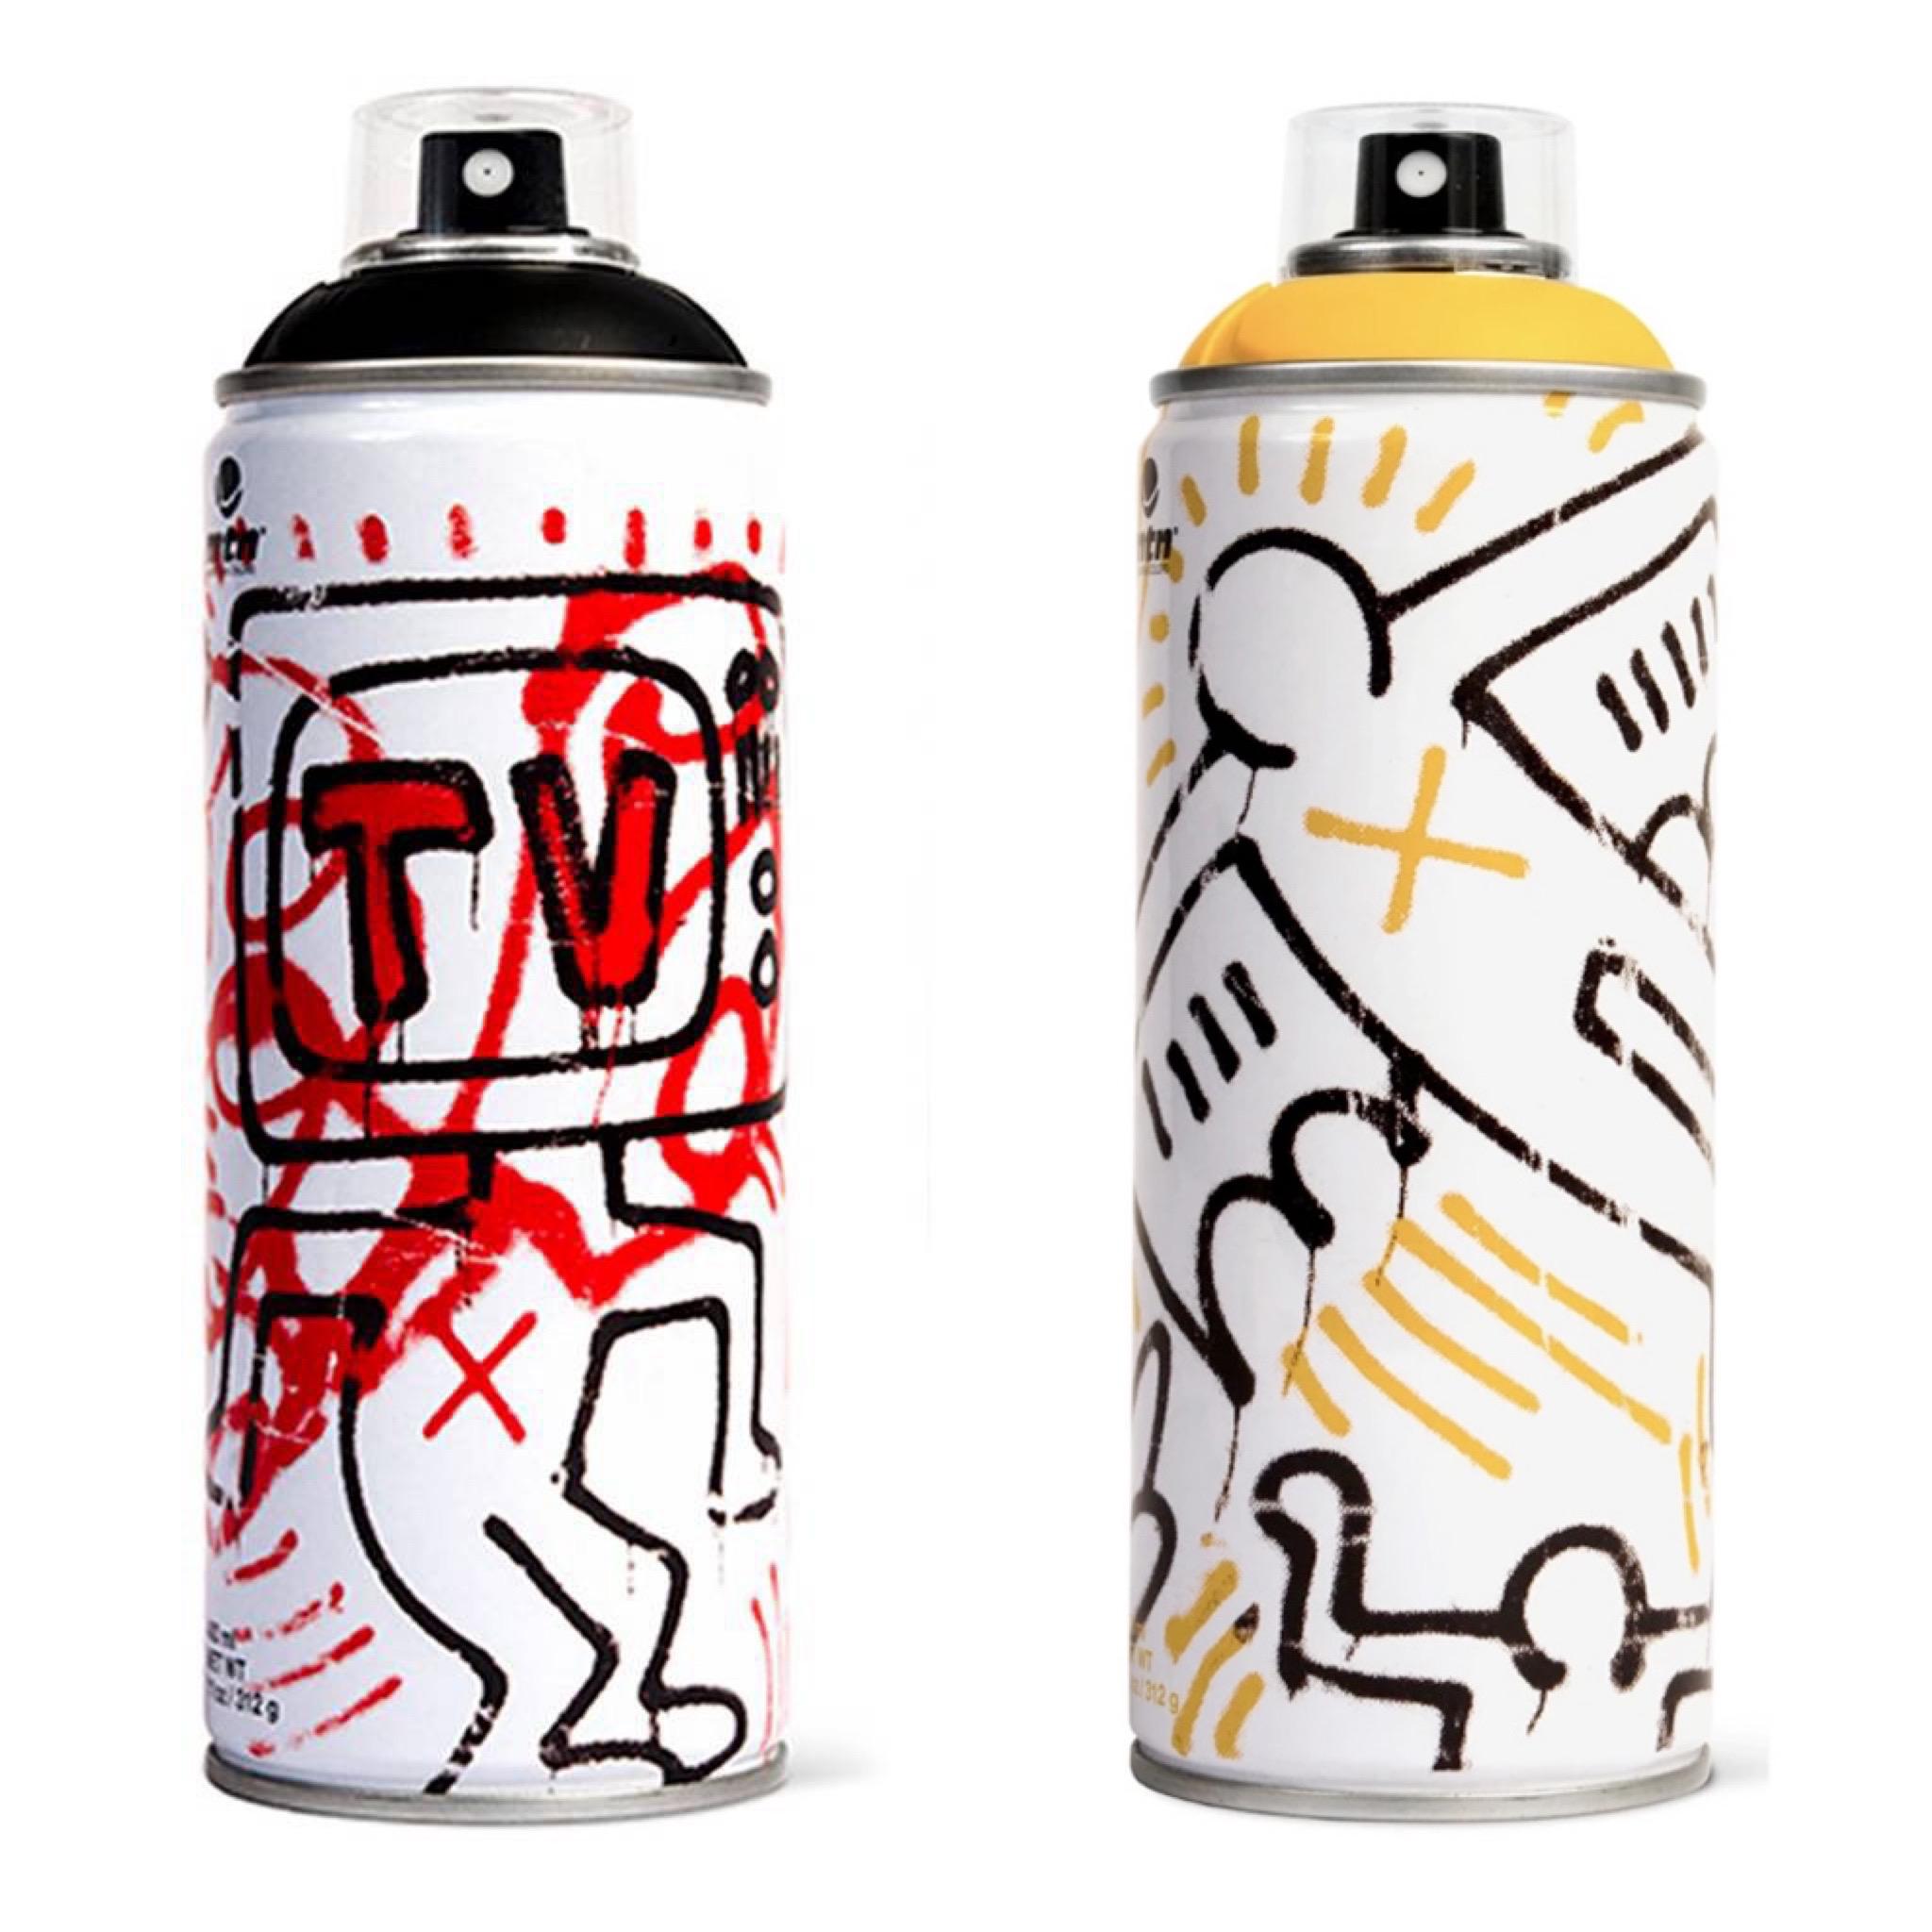 Limitierte Auflage Keith Haring Sprühfarbe-Dose (Set 2)